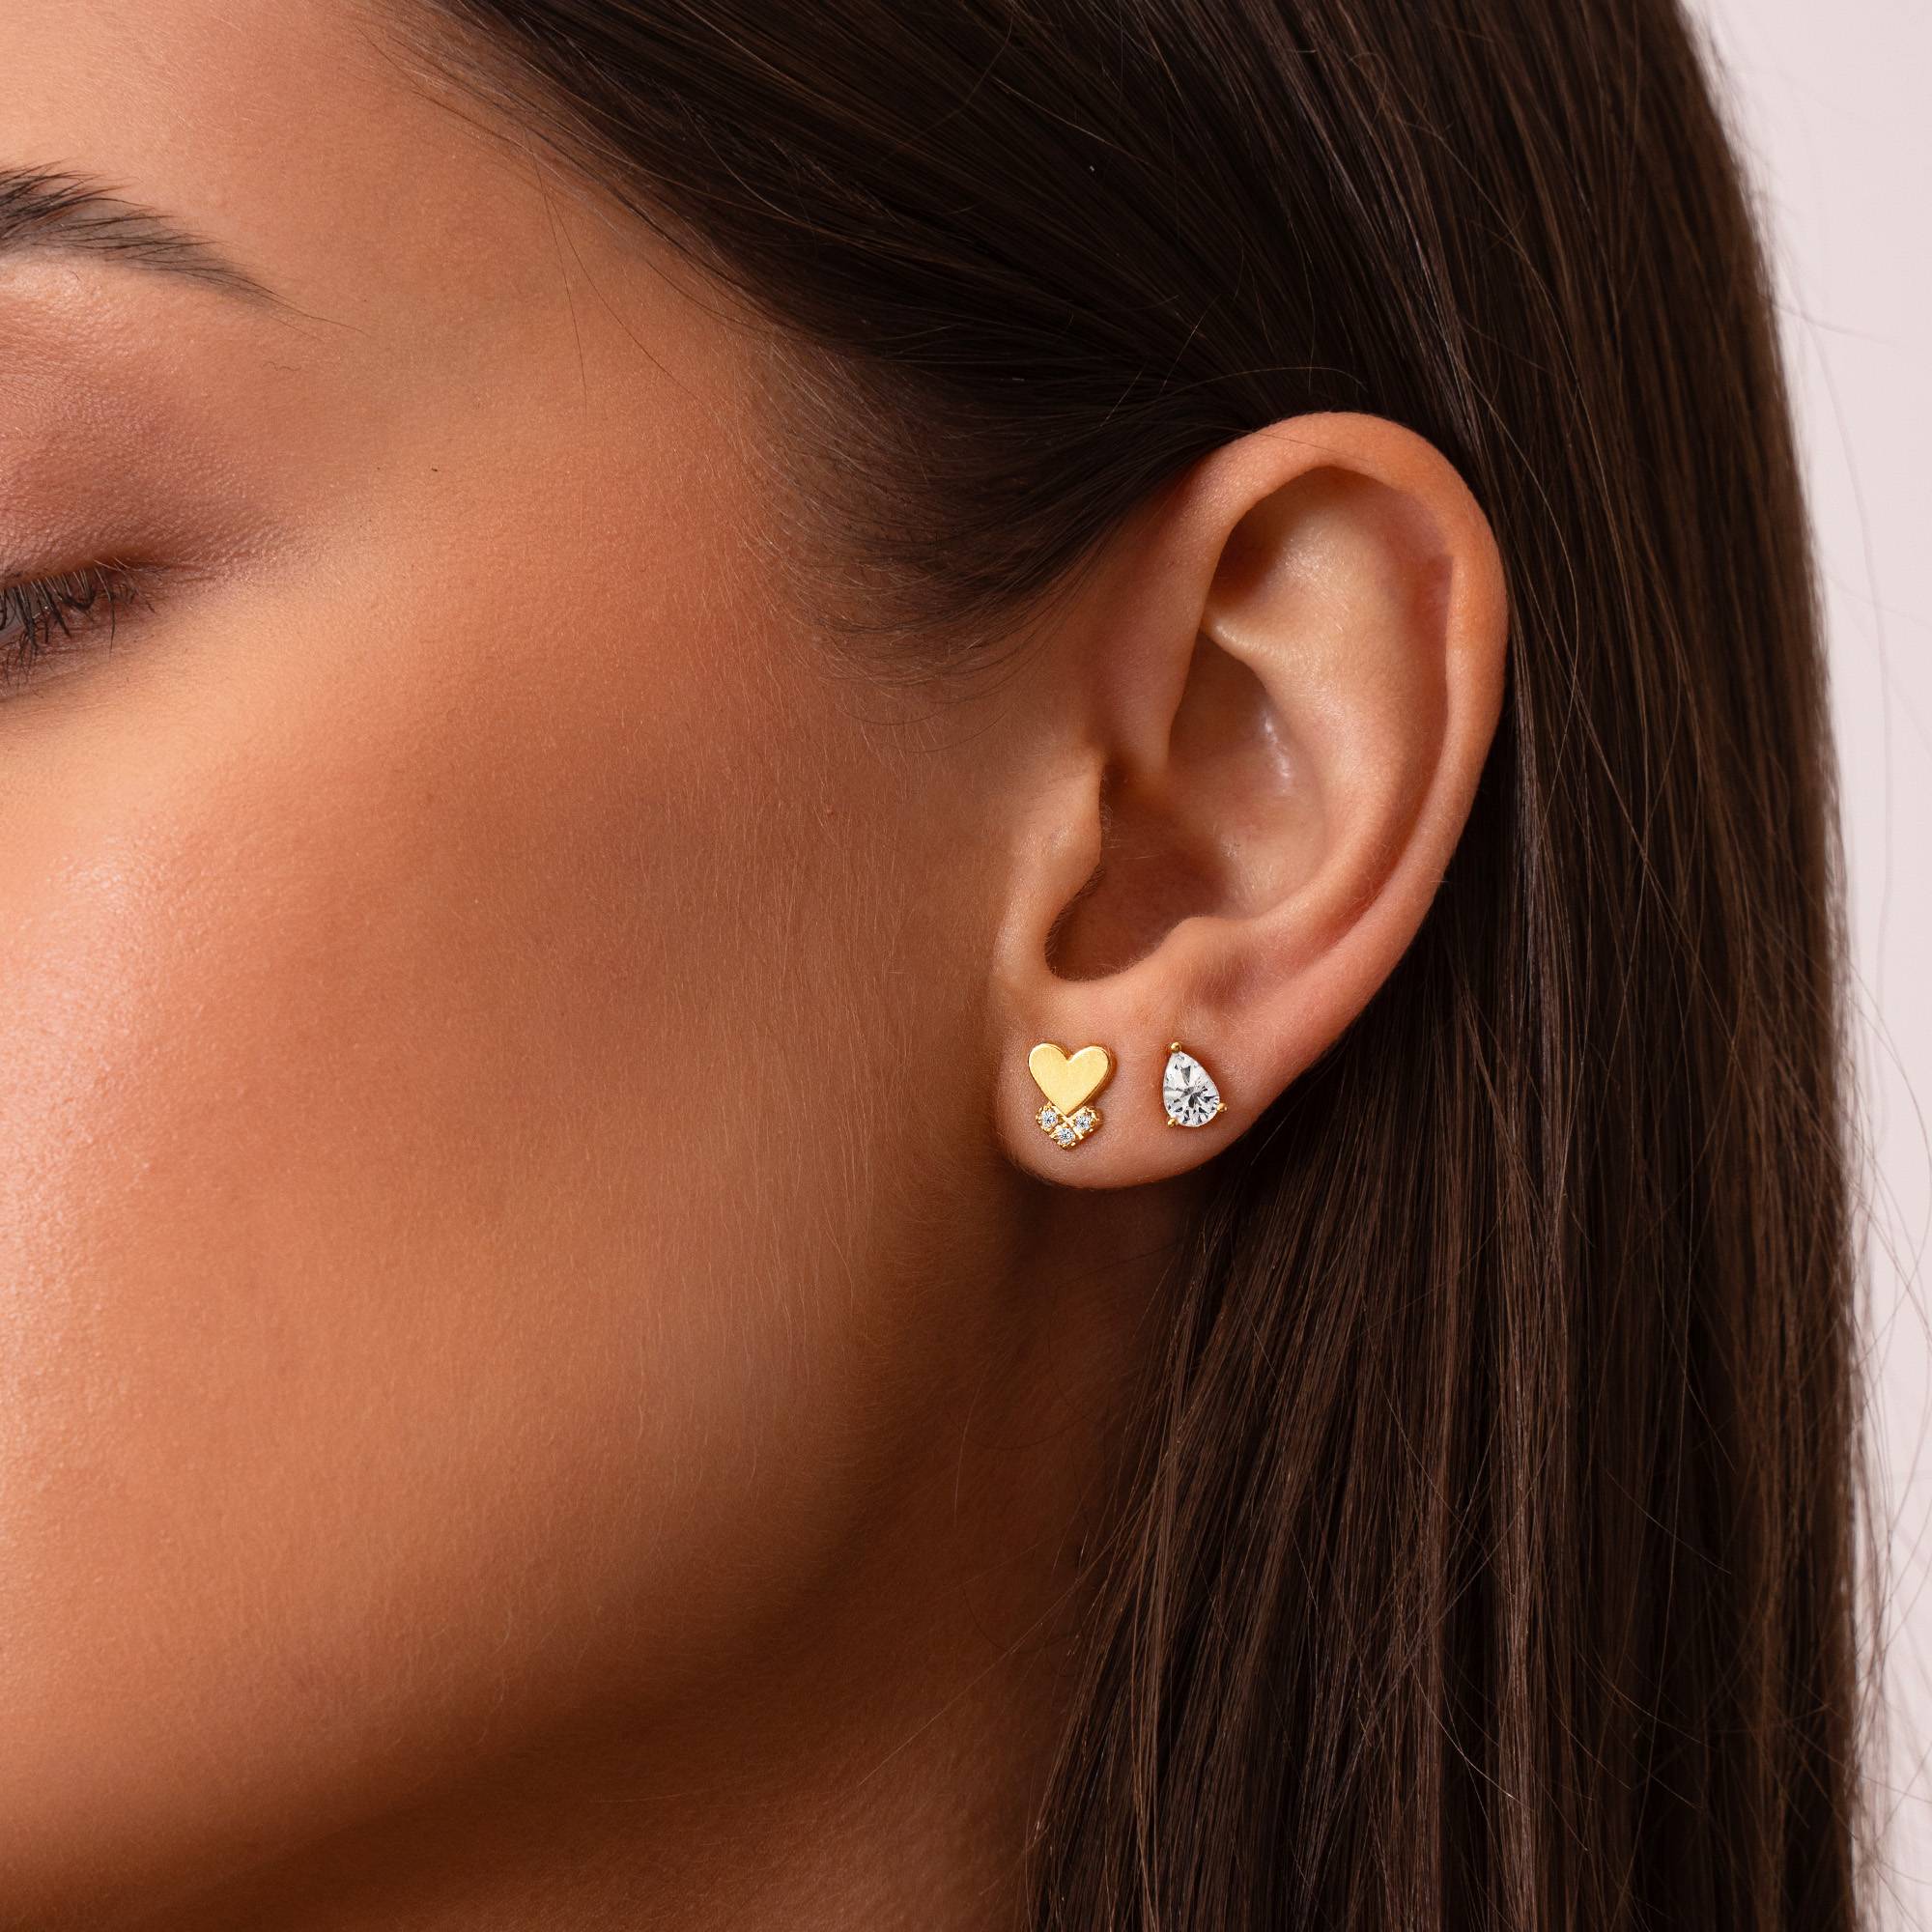 Dakota Heart Earrings with Diamonds in 18k Gold Plating-3 product photo